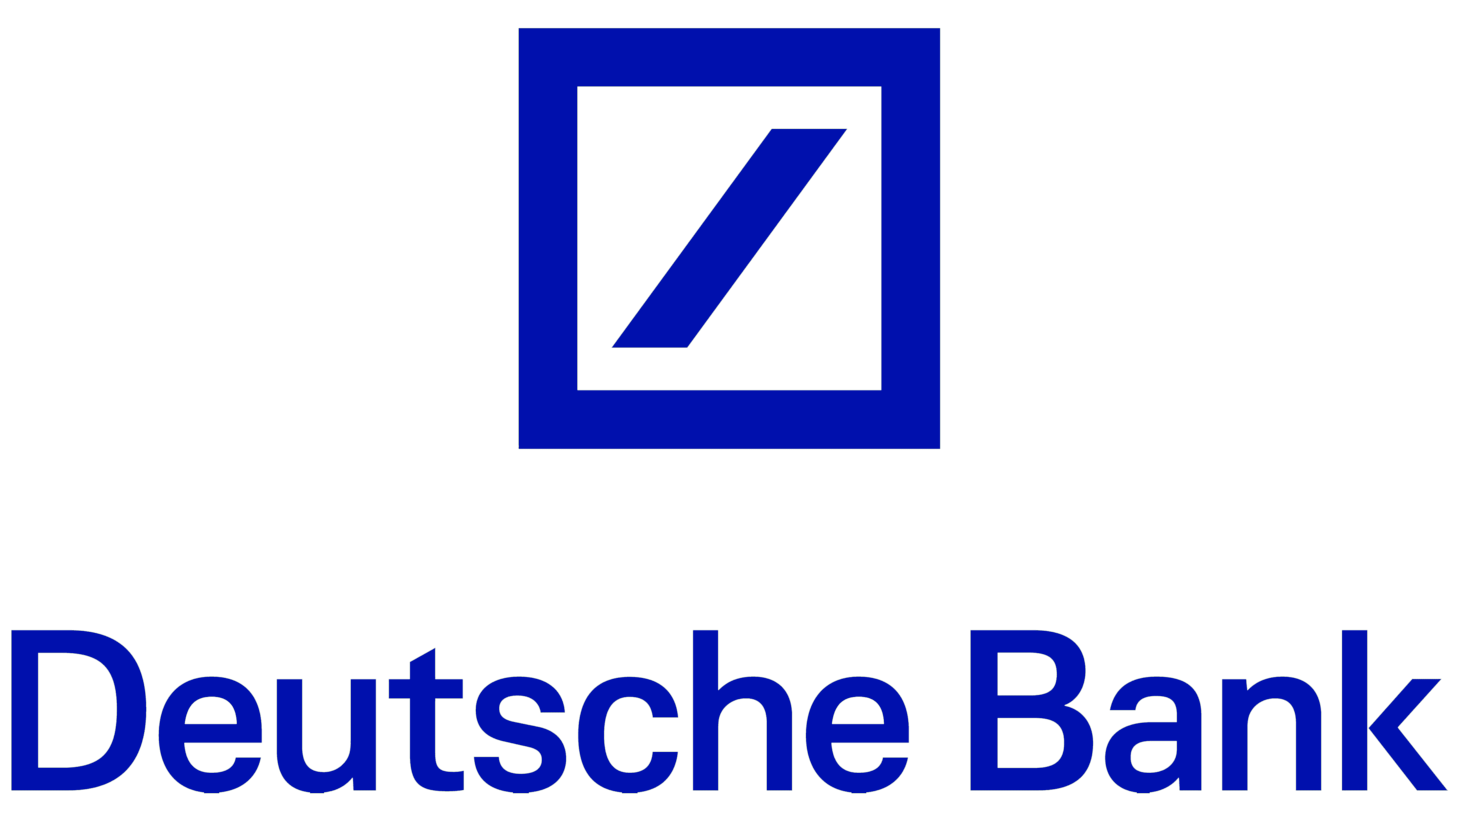 Deutsche bank symbol